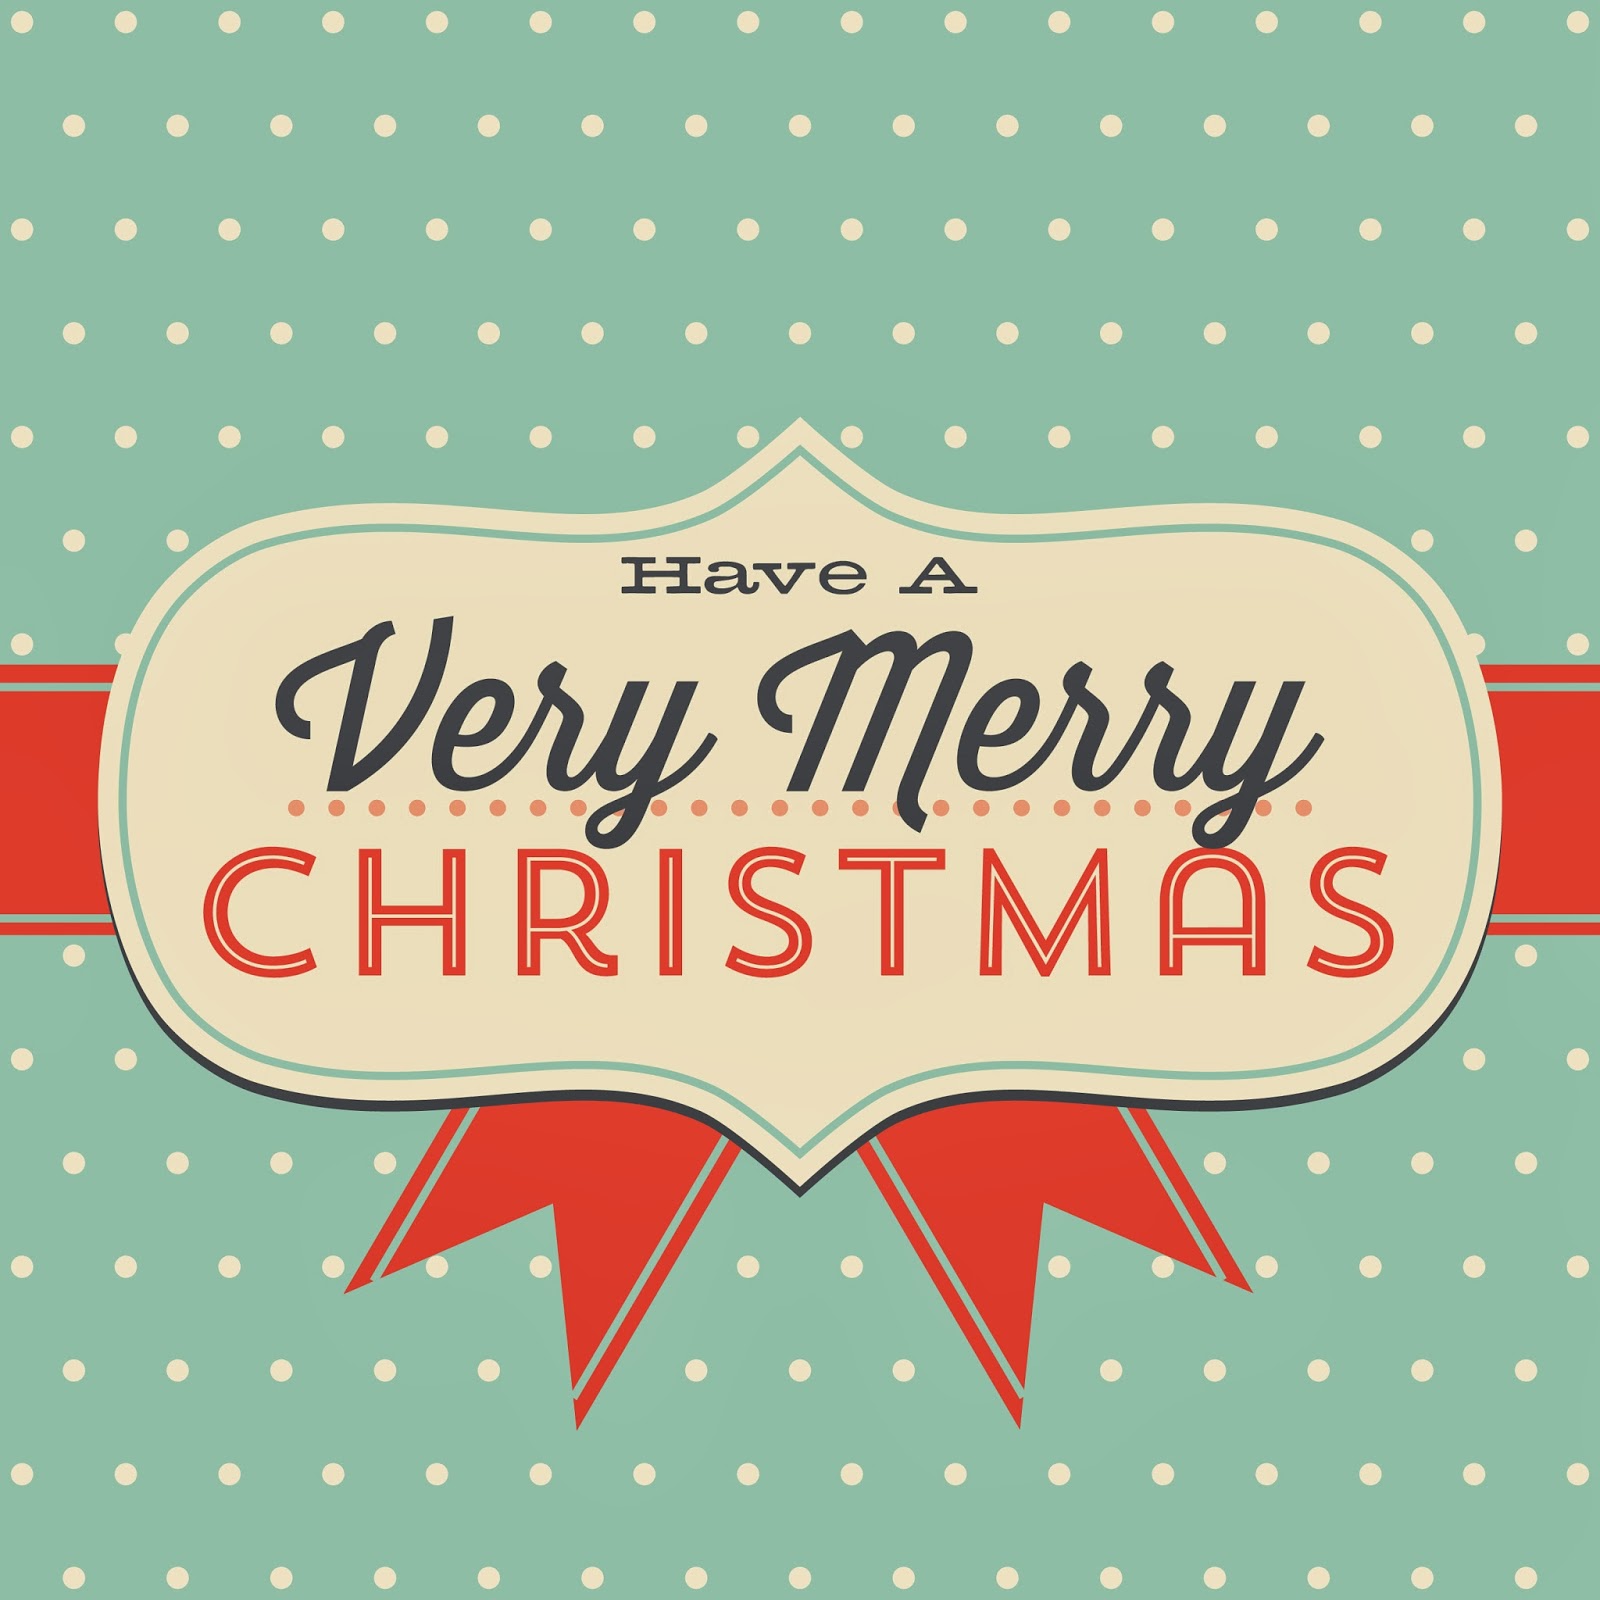 Sew Retro Rose: Merry Christmas and a Blog Holiday